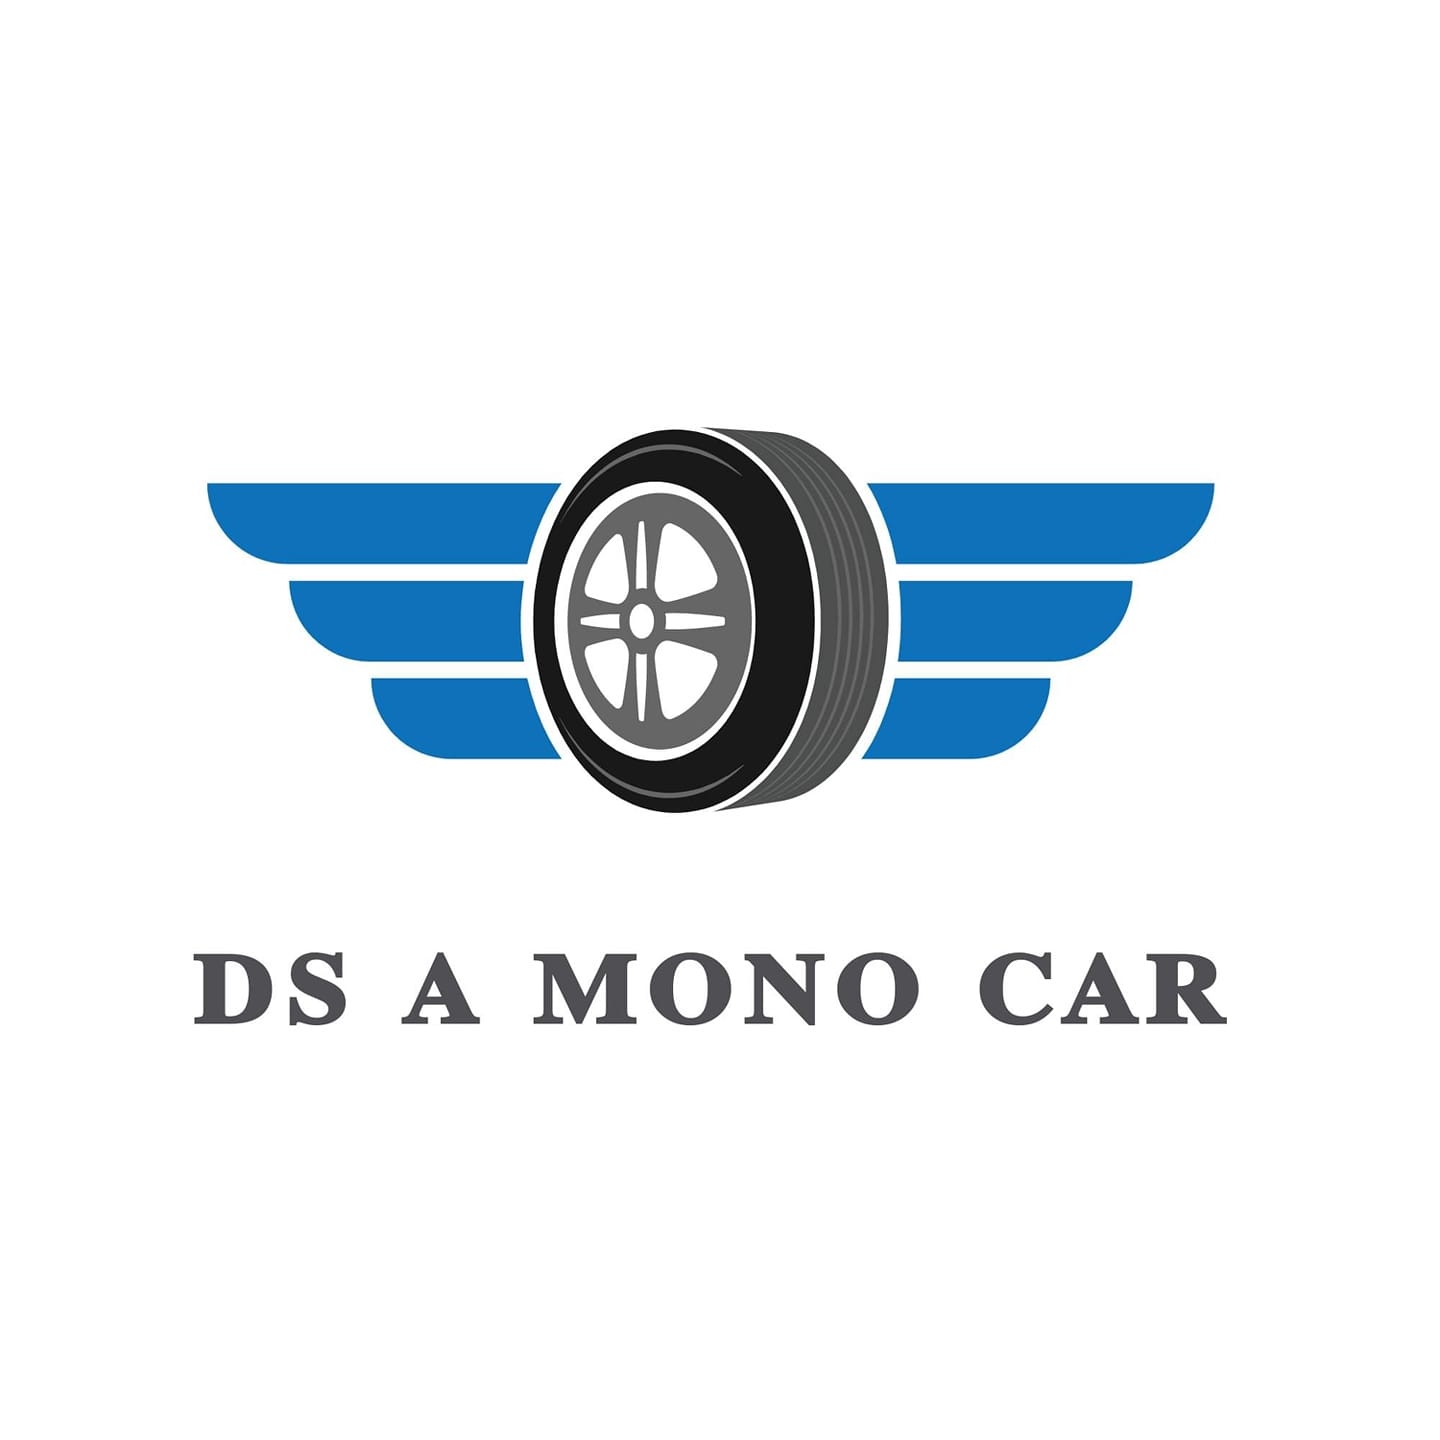 DS A MONO CAR